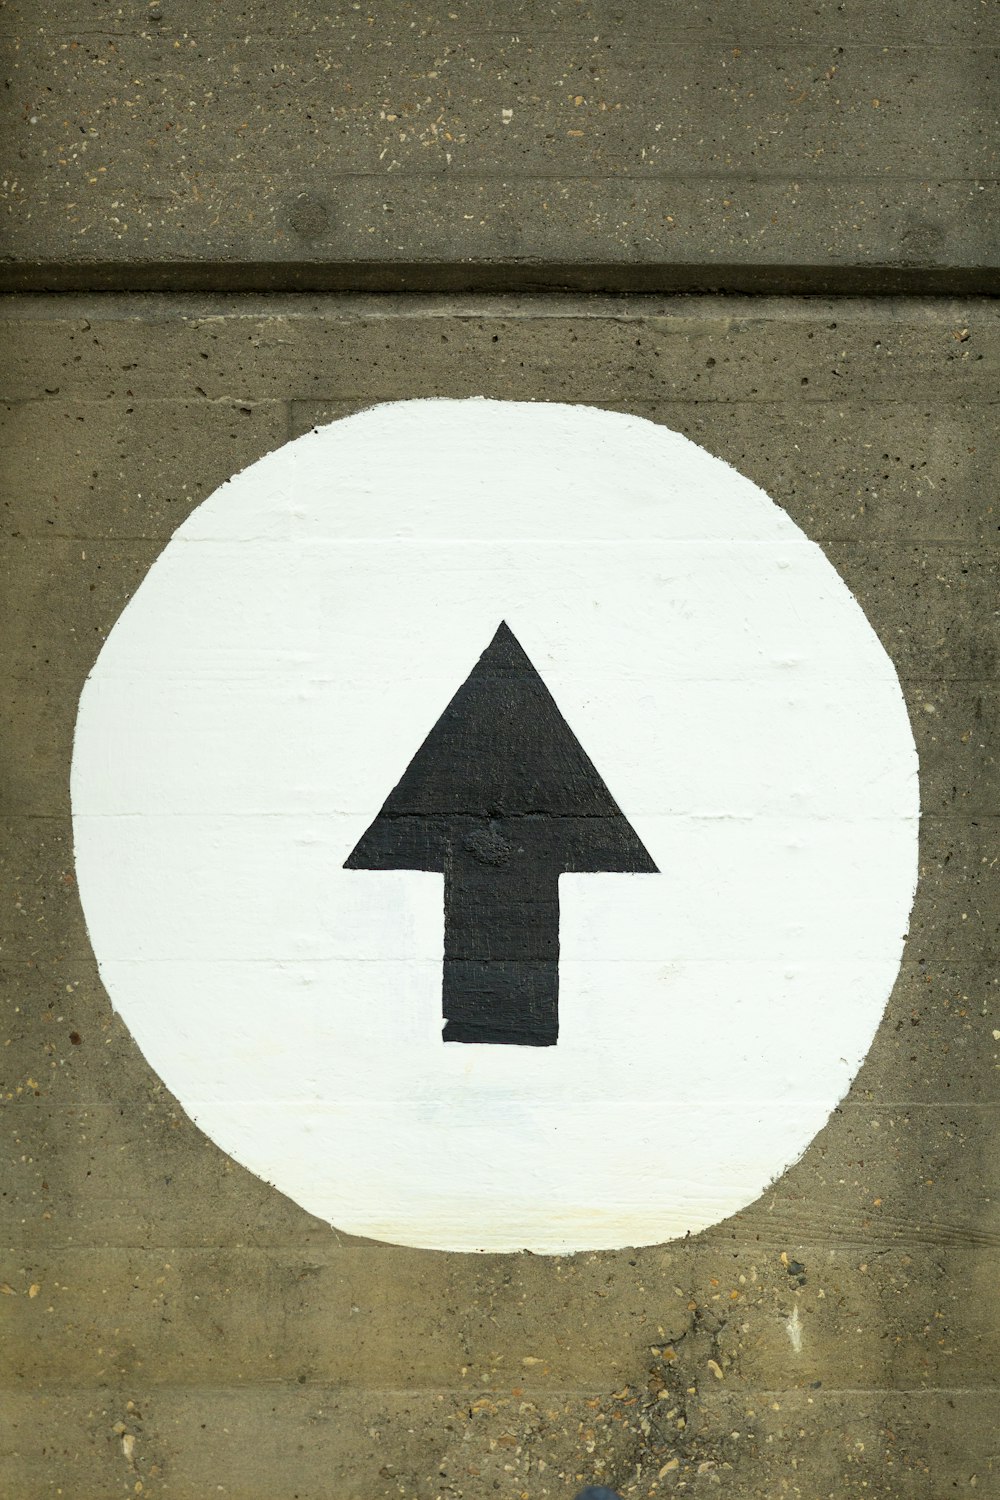 a white circle with a black arrow